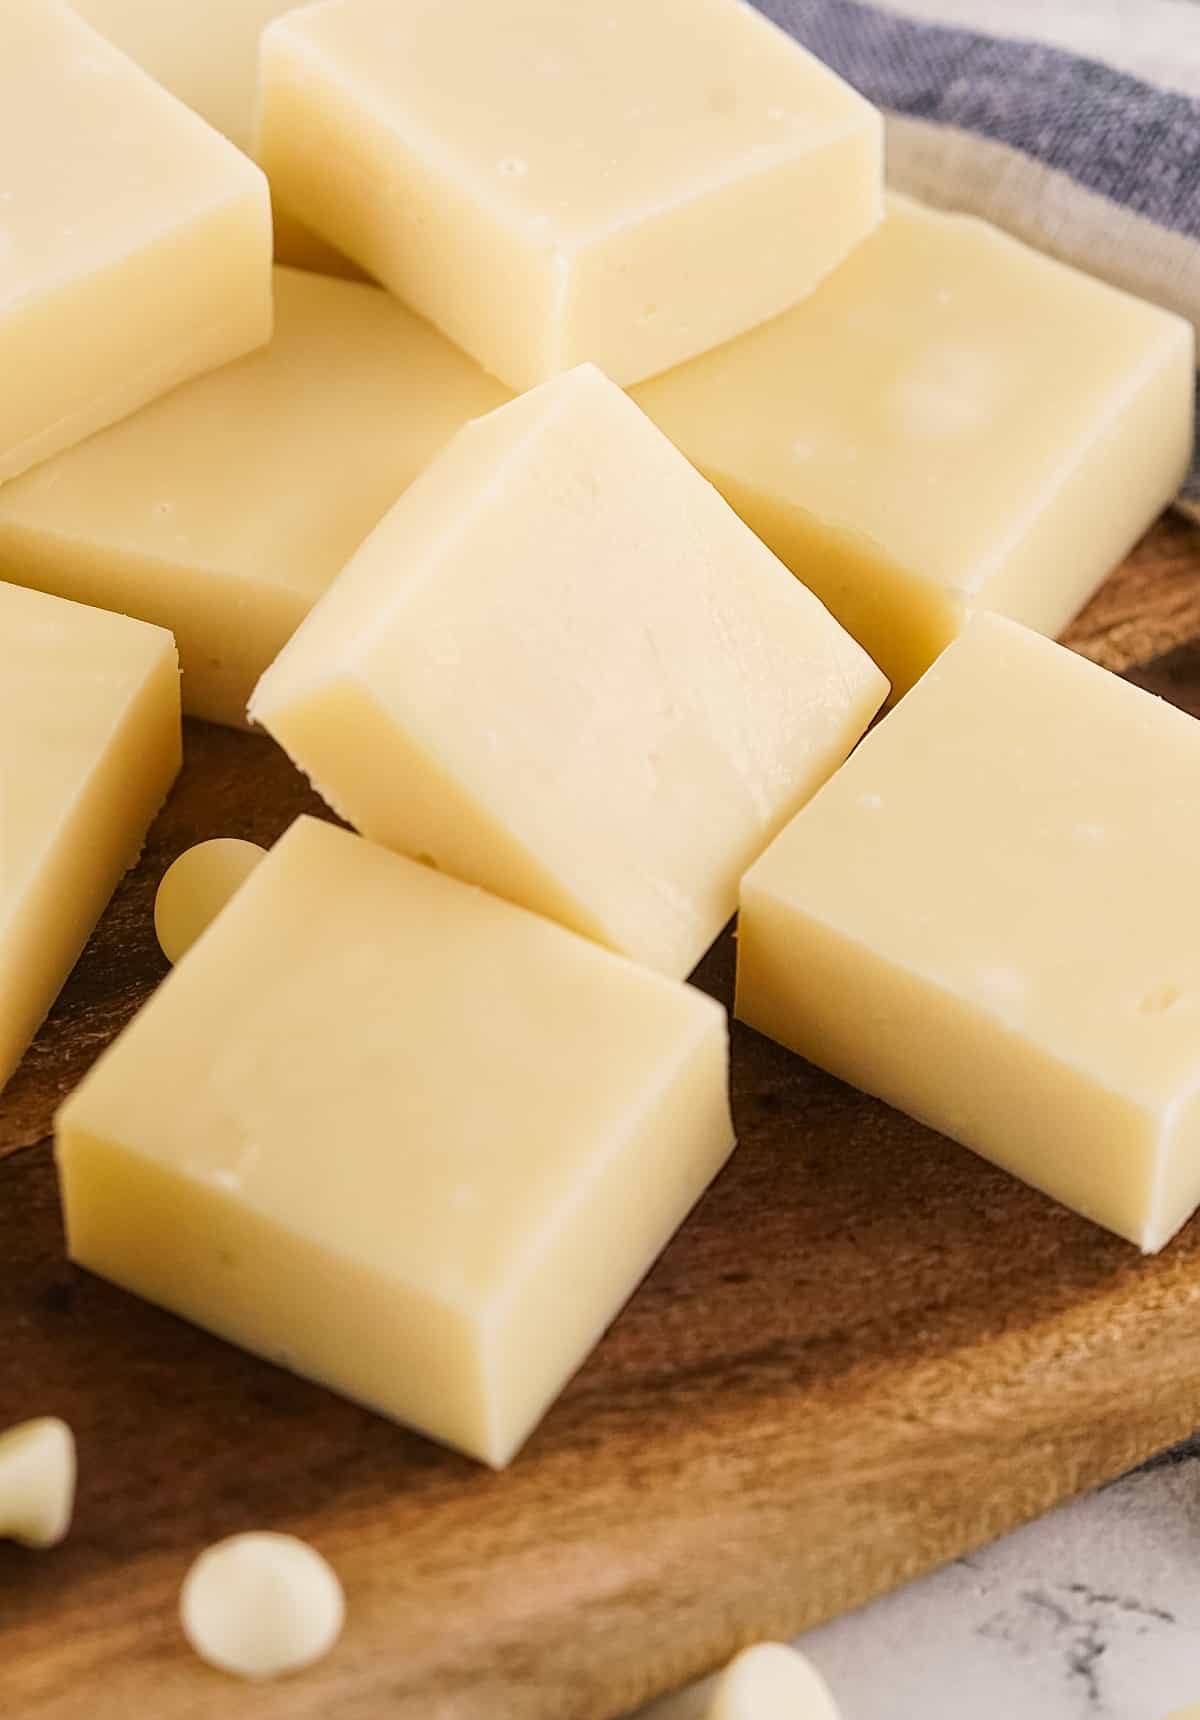 Several squares of vanilla fudge on a wooden board.